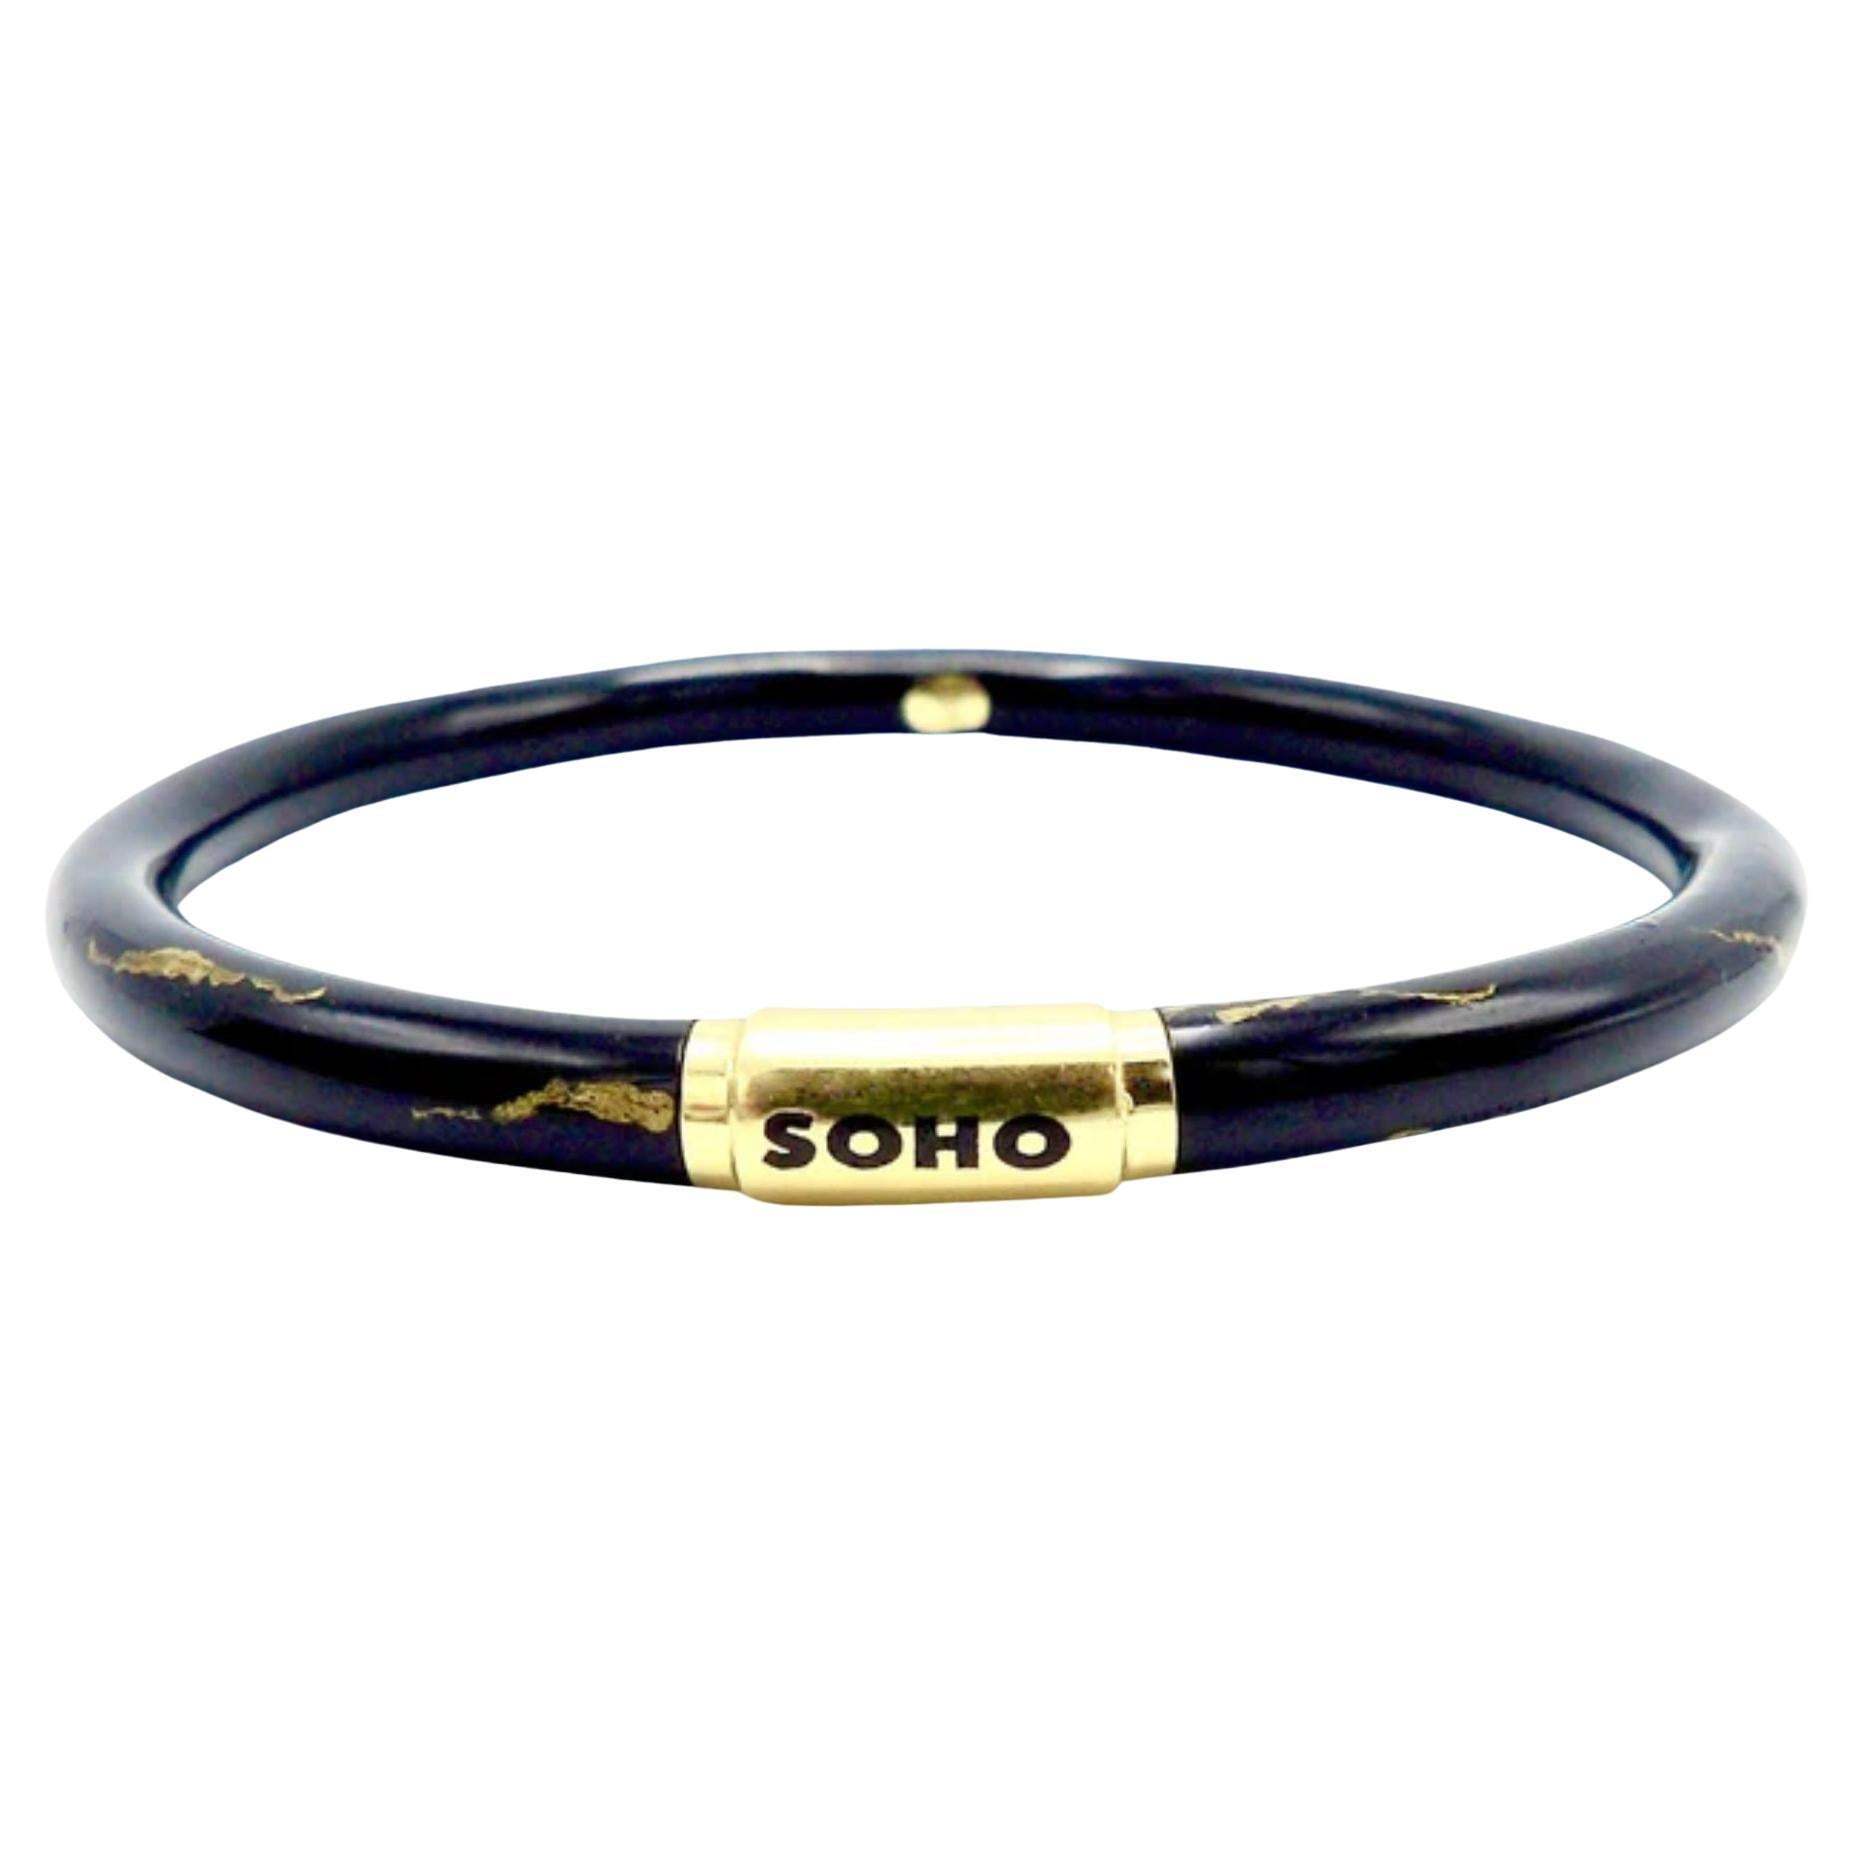 Soho 18K Gold Black Enamel Calligraphic Stripe Bangle Bracelet, circa 2010